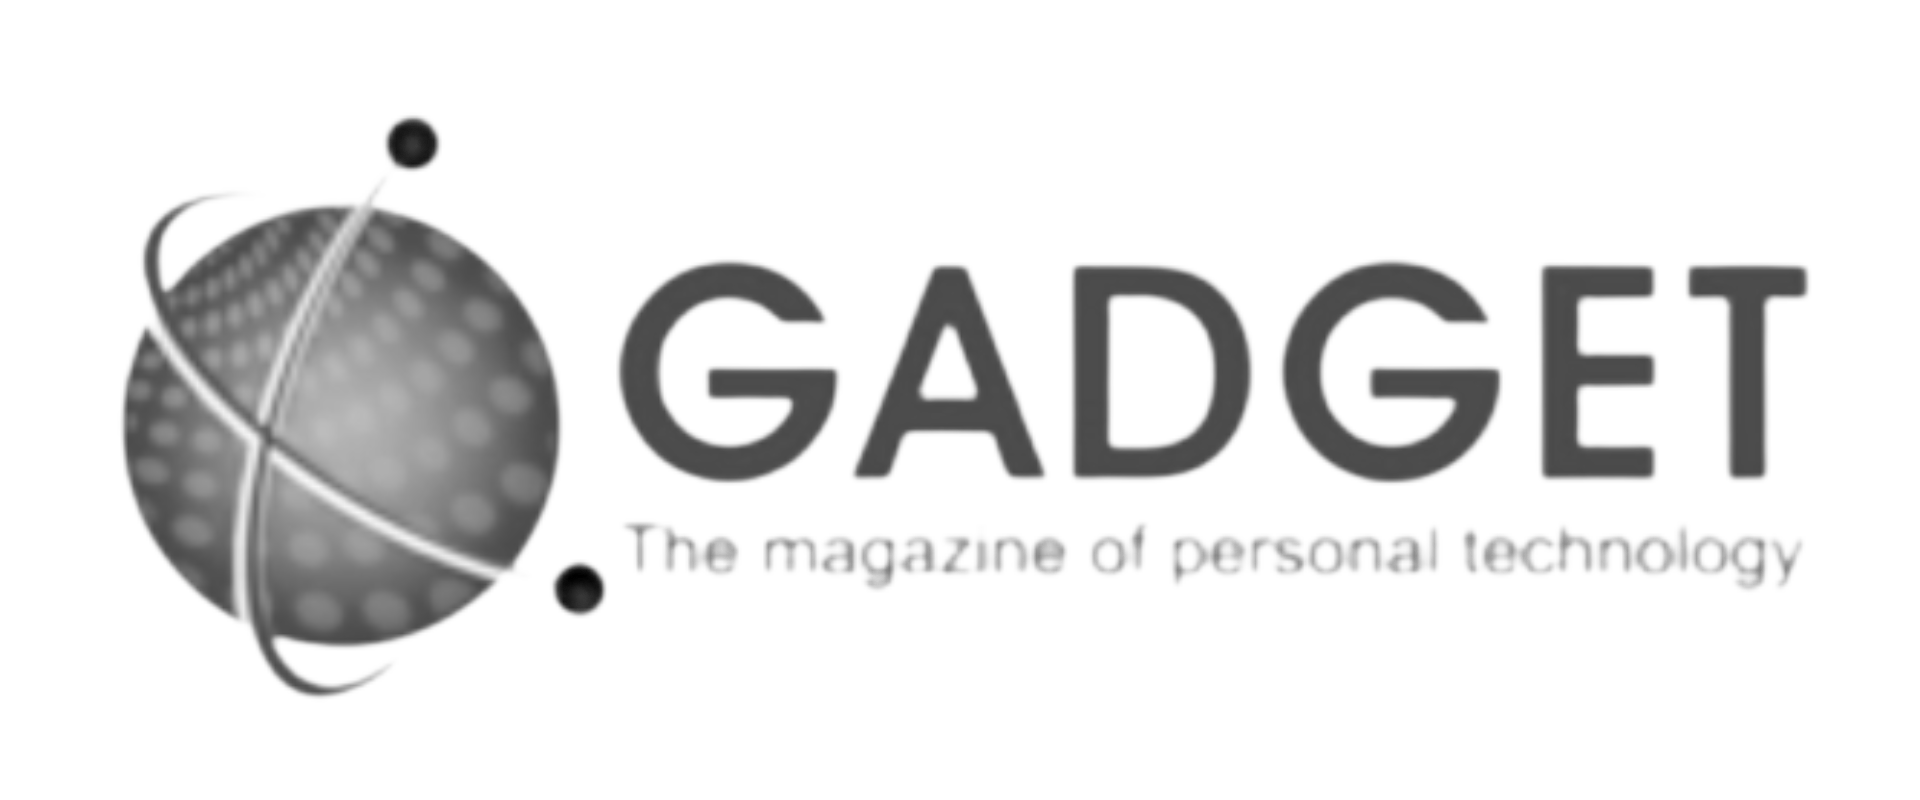 gadget magazine logo